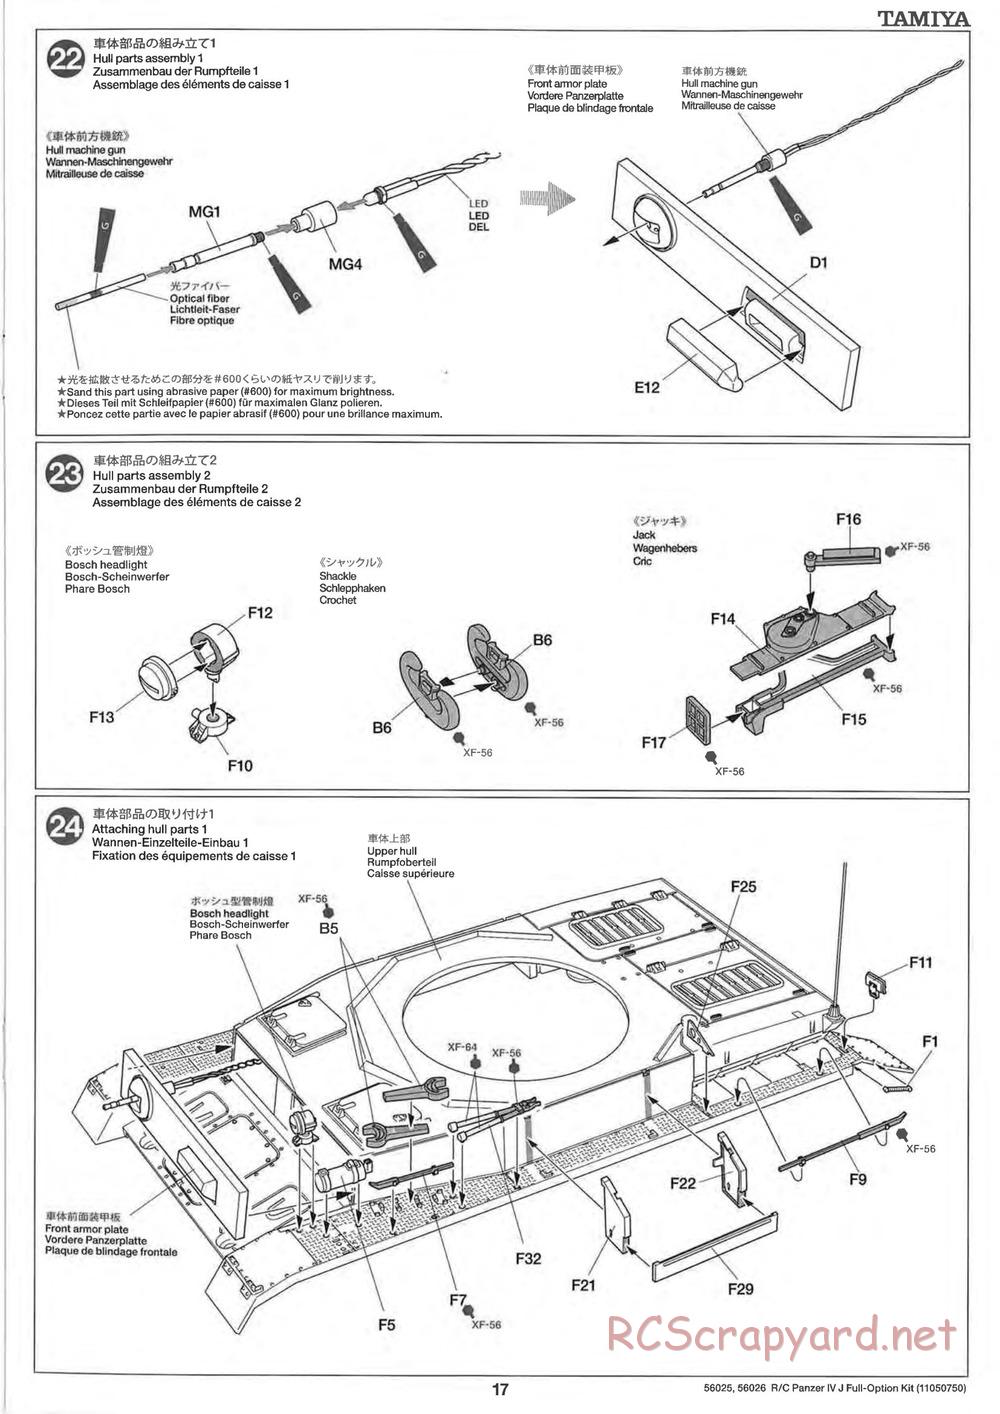 Tamiya - Panzerkampfwagen IV Ausf.J - 1/16 Scale Chassis - Manual - Page 17